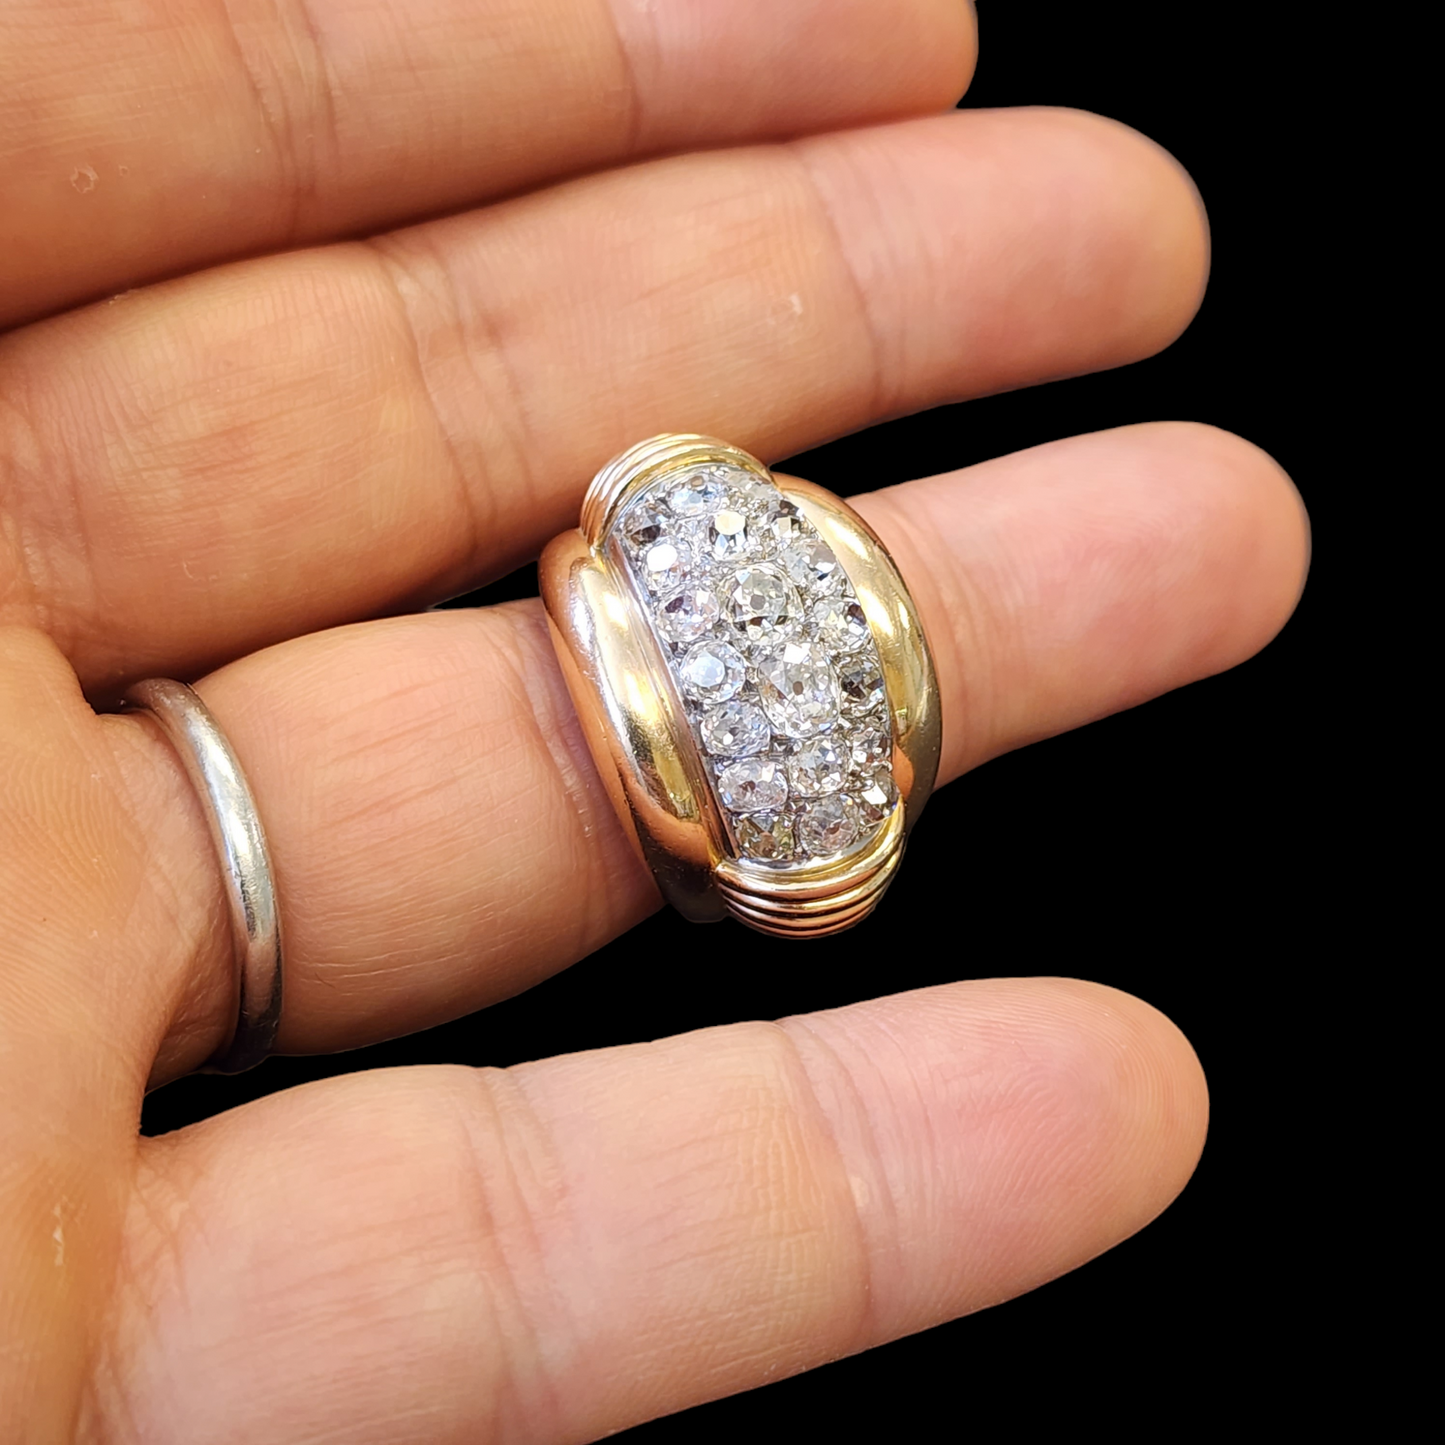 French 1930s Platinum & 18KT Yellow Gold Diamond Ring on finger